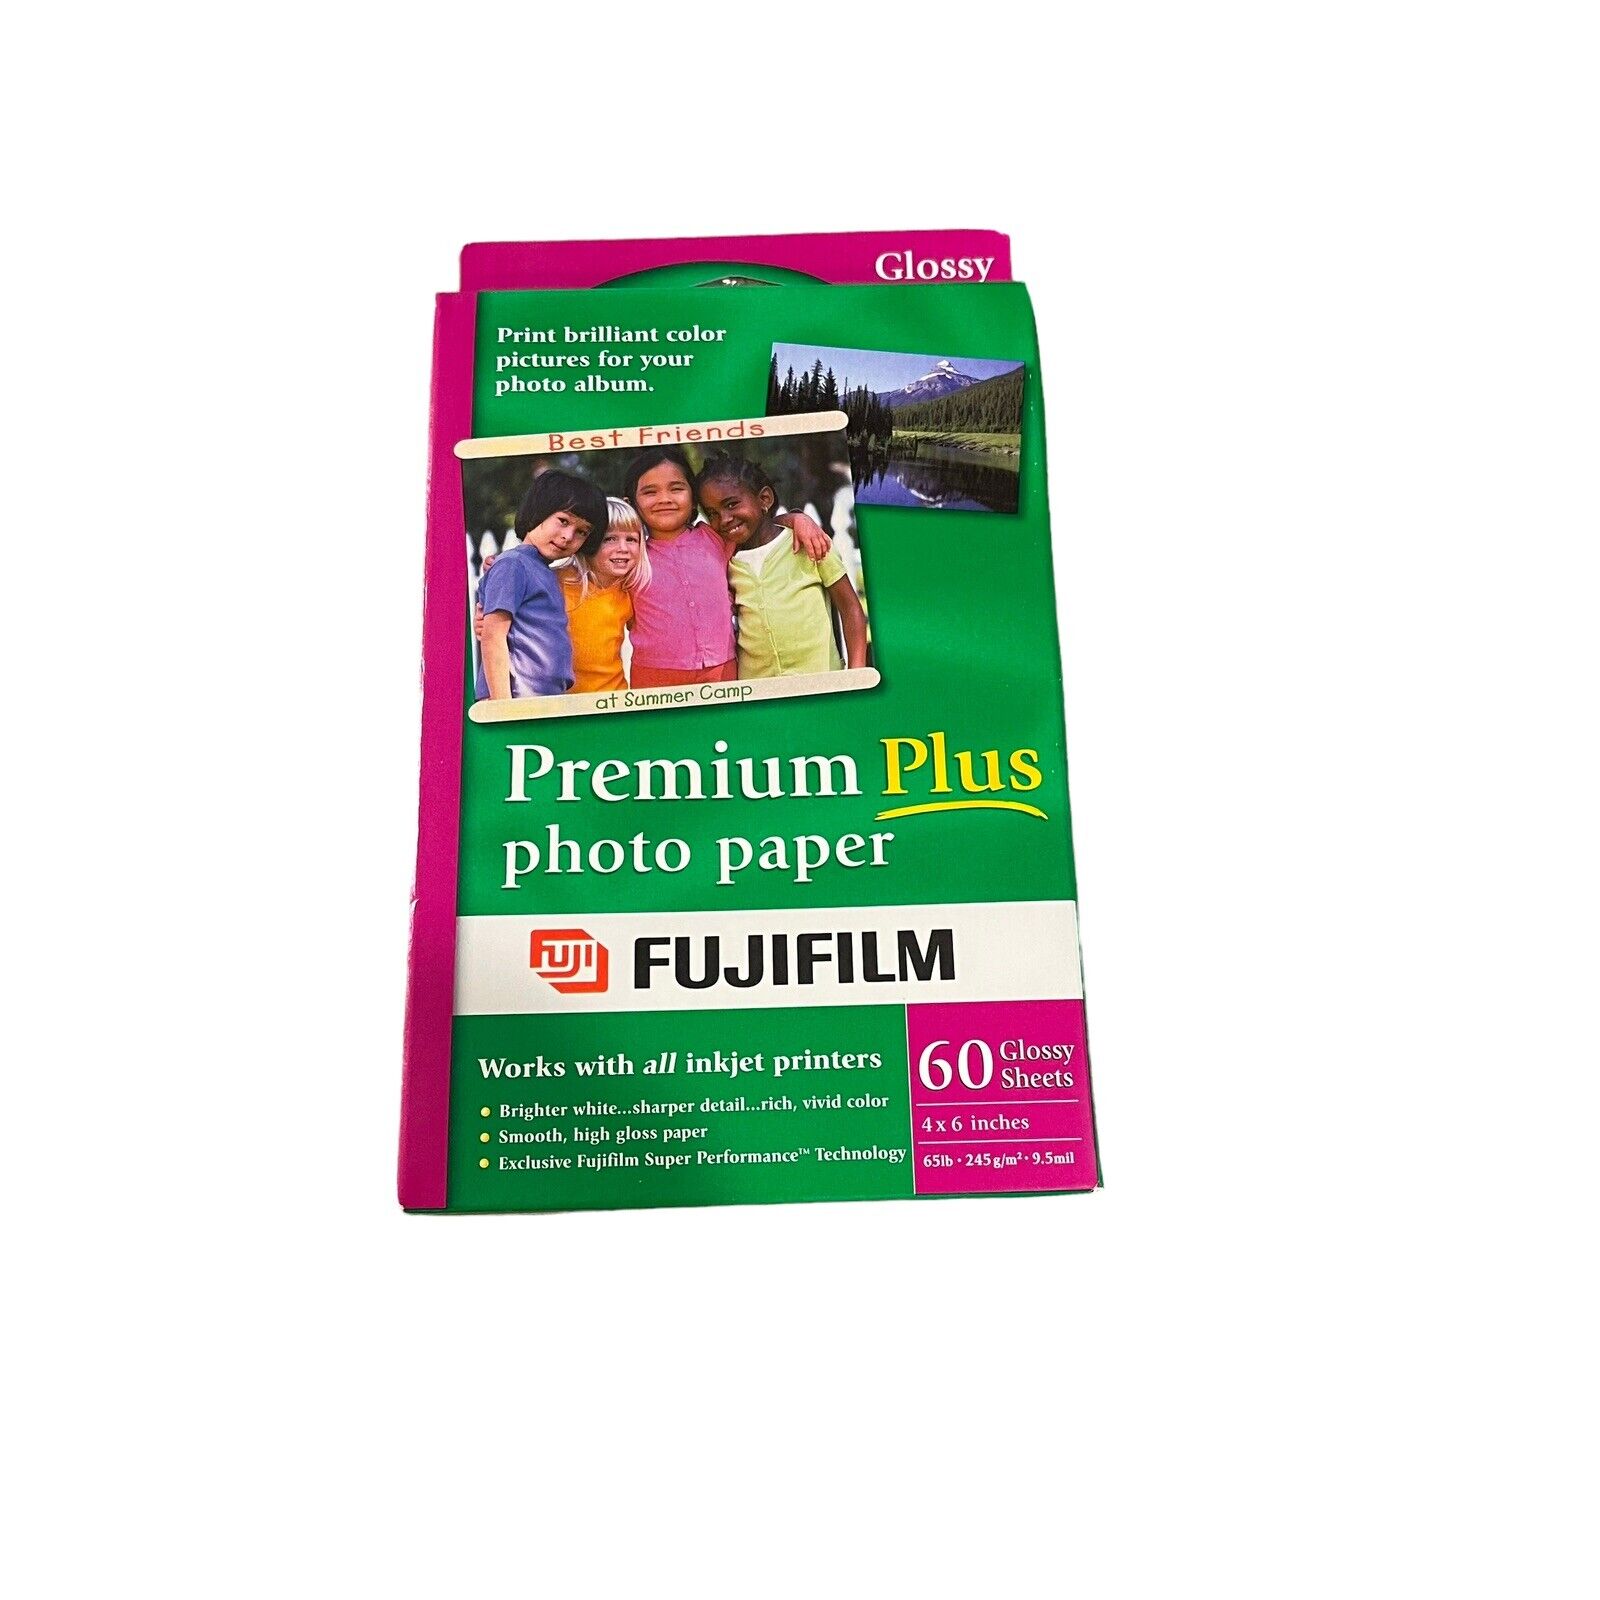 NEW Fujifilm Premium Plus Photo Paper 60 Glossy Sheets 4 X 6” Works W All Inkjet